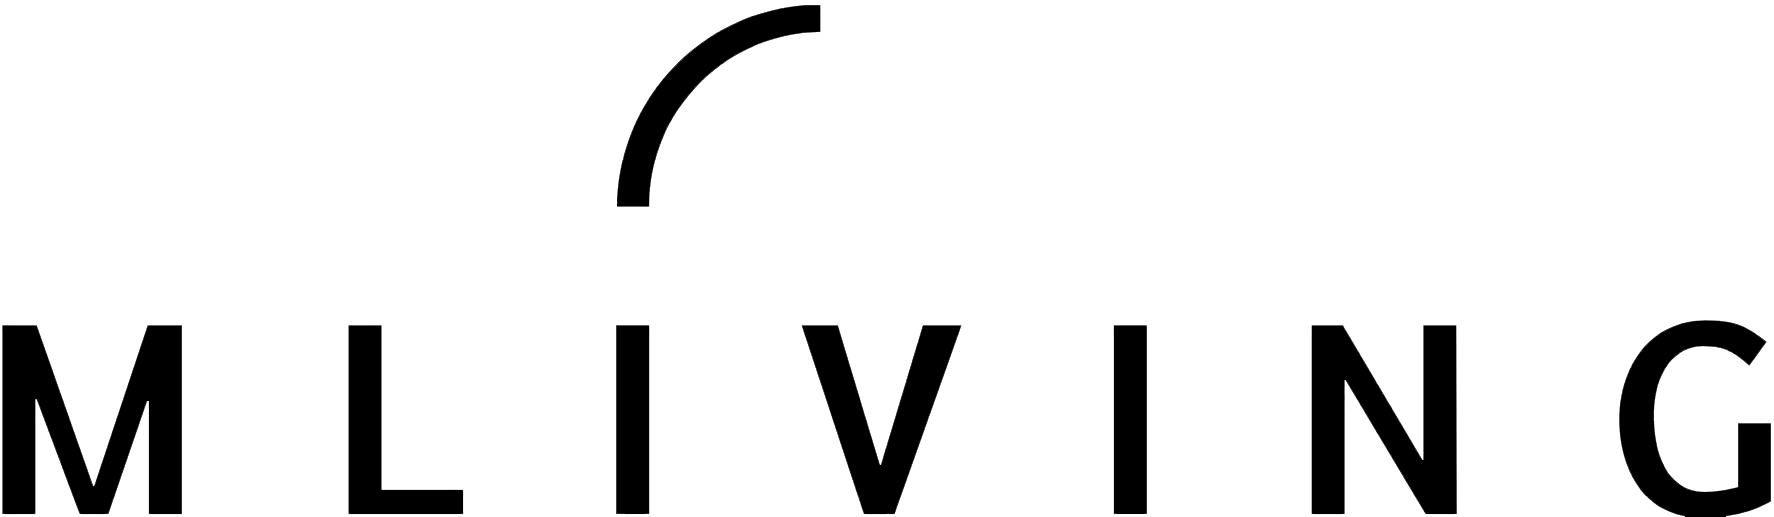 mliving logo